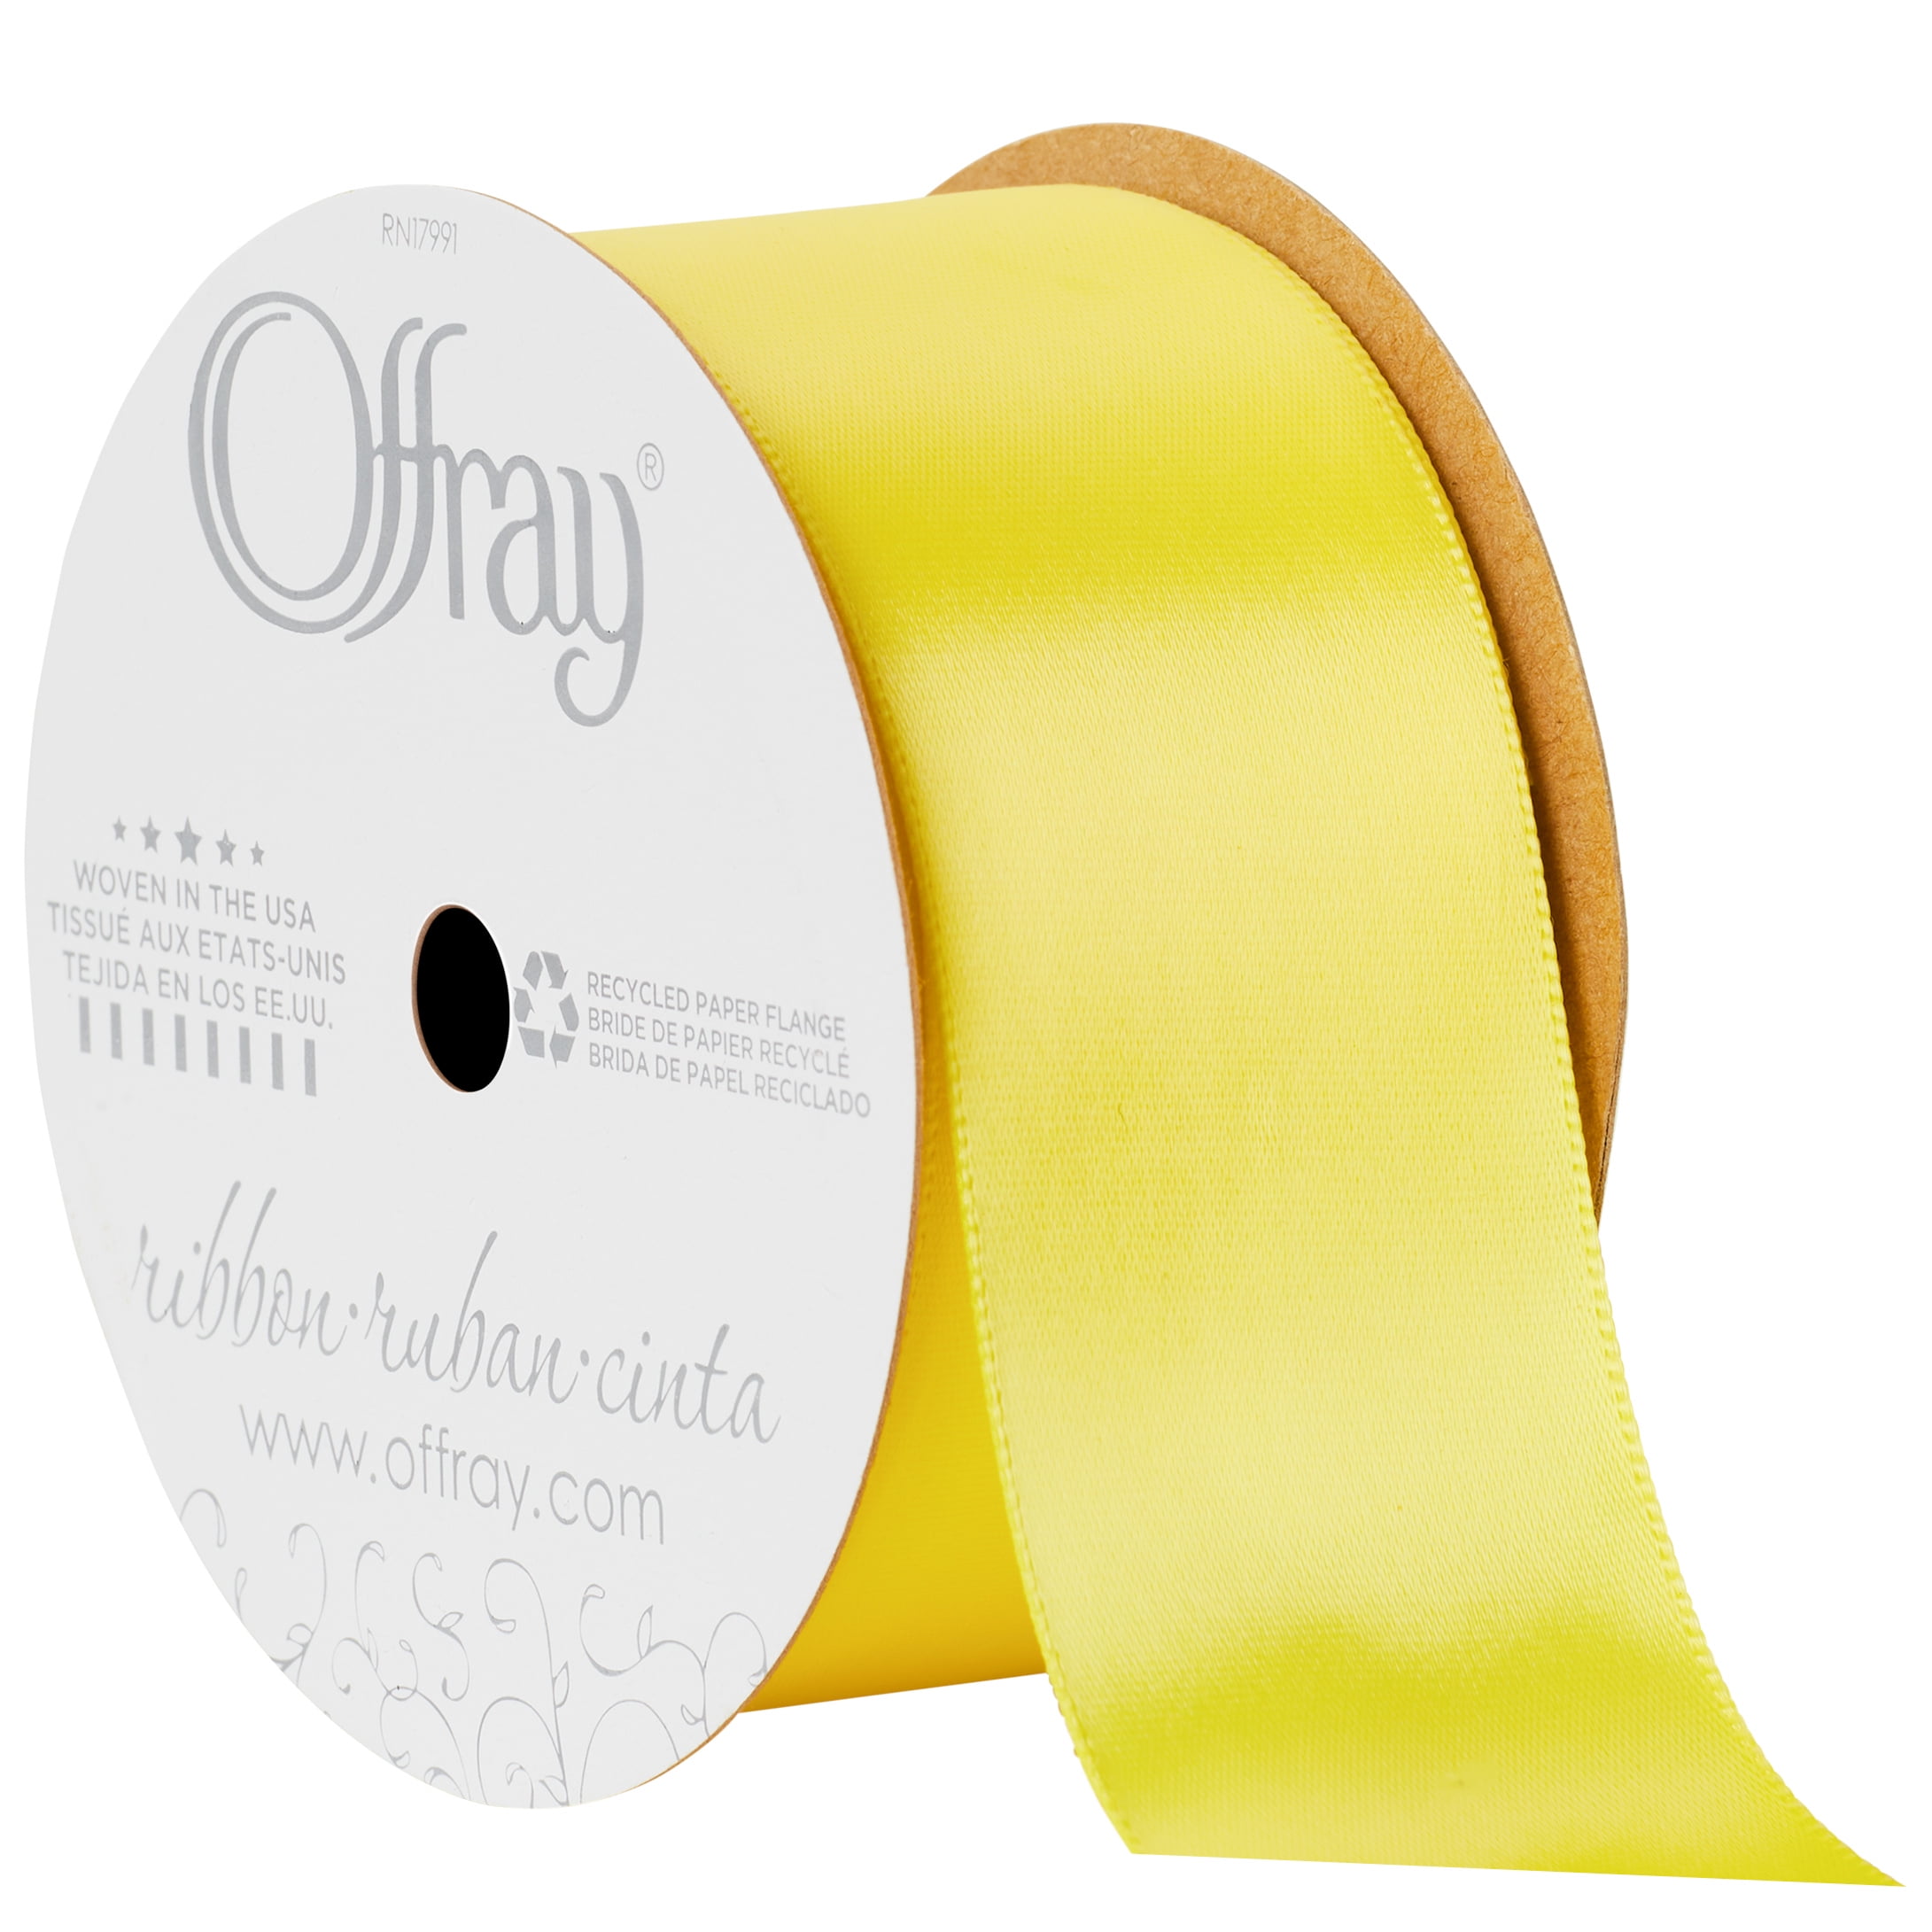 Offray Ribbon, Lemon Yellow 1 1/2 inch Single Face Satin Polyester